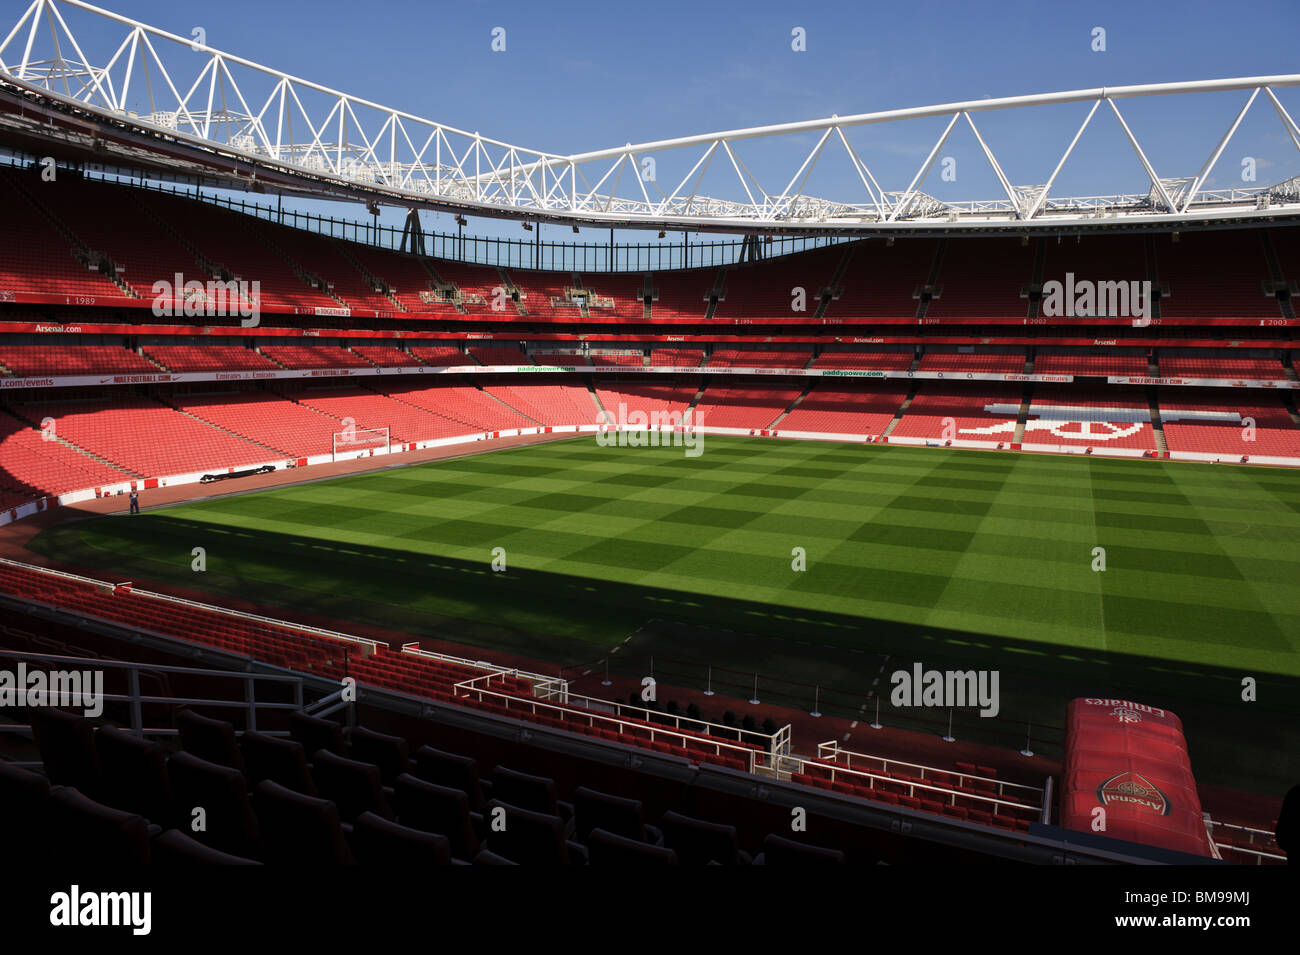 L'Emirates stadium, Arsenal Football Club, premier football ligue de football anglais. Banque D'Images